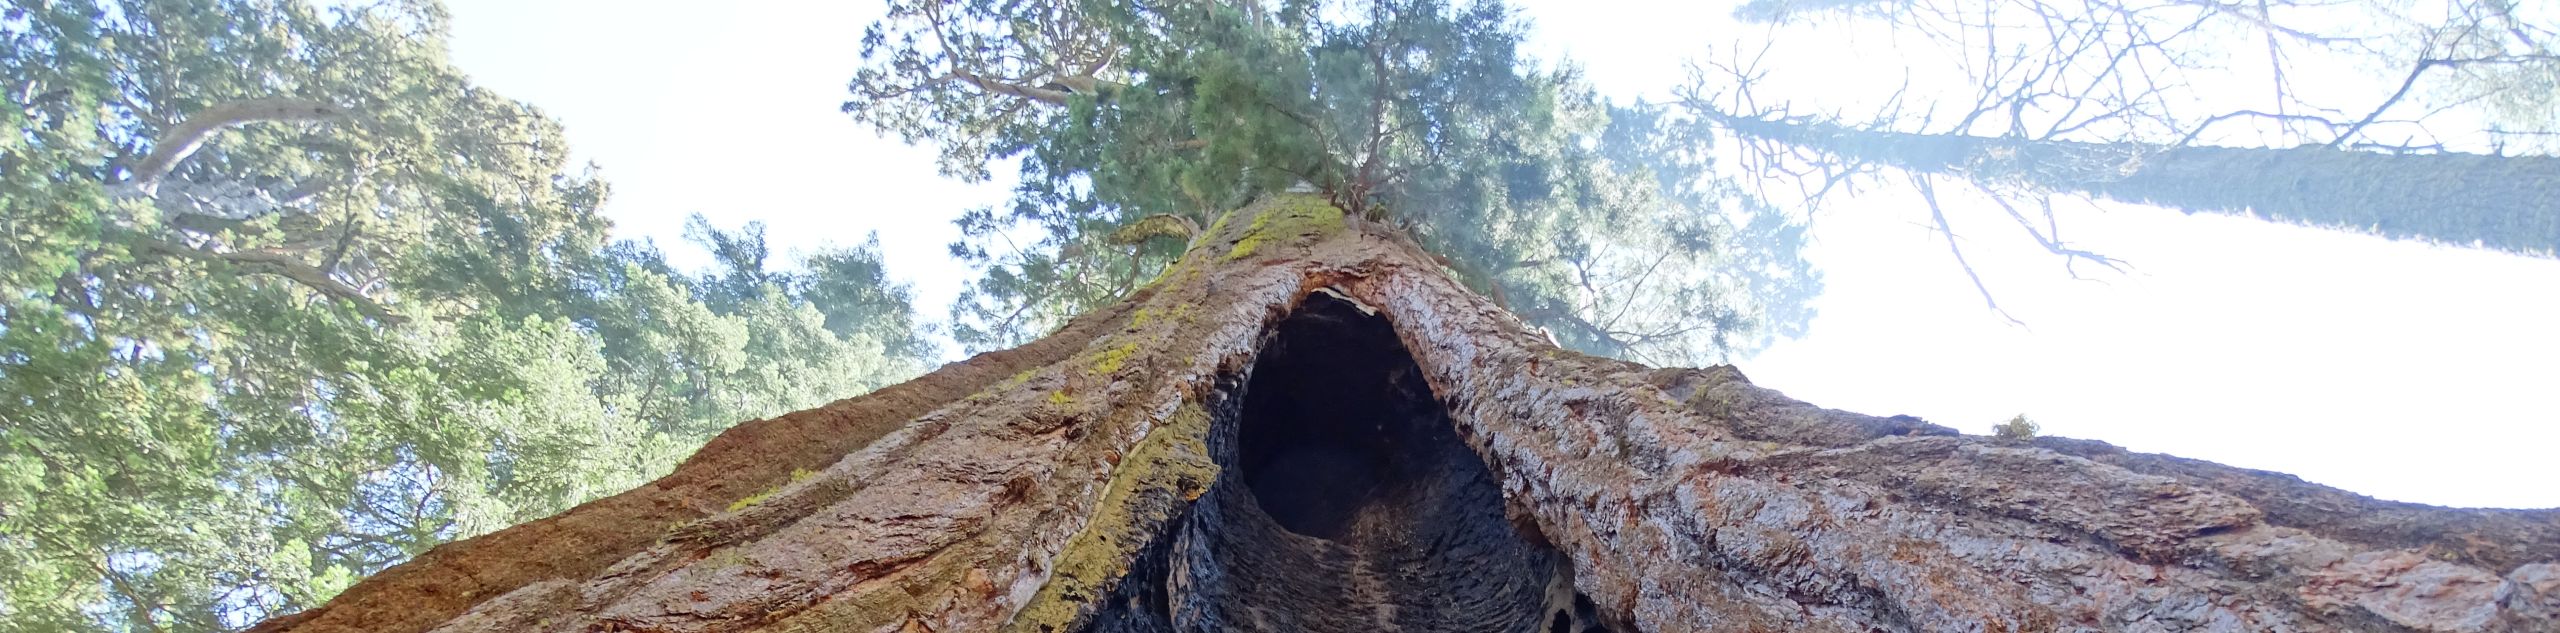 McKinley Grove of Giant Sequoias Trail